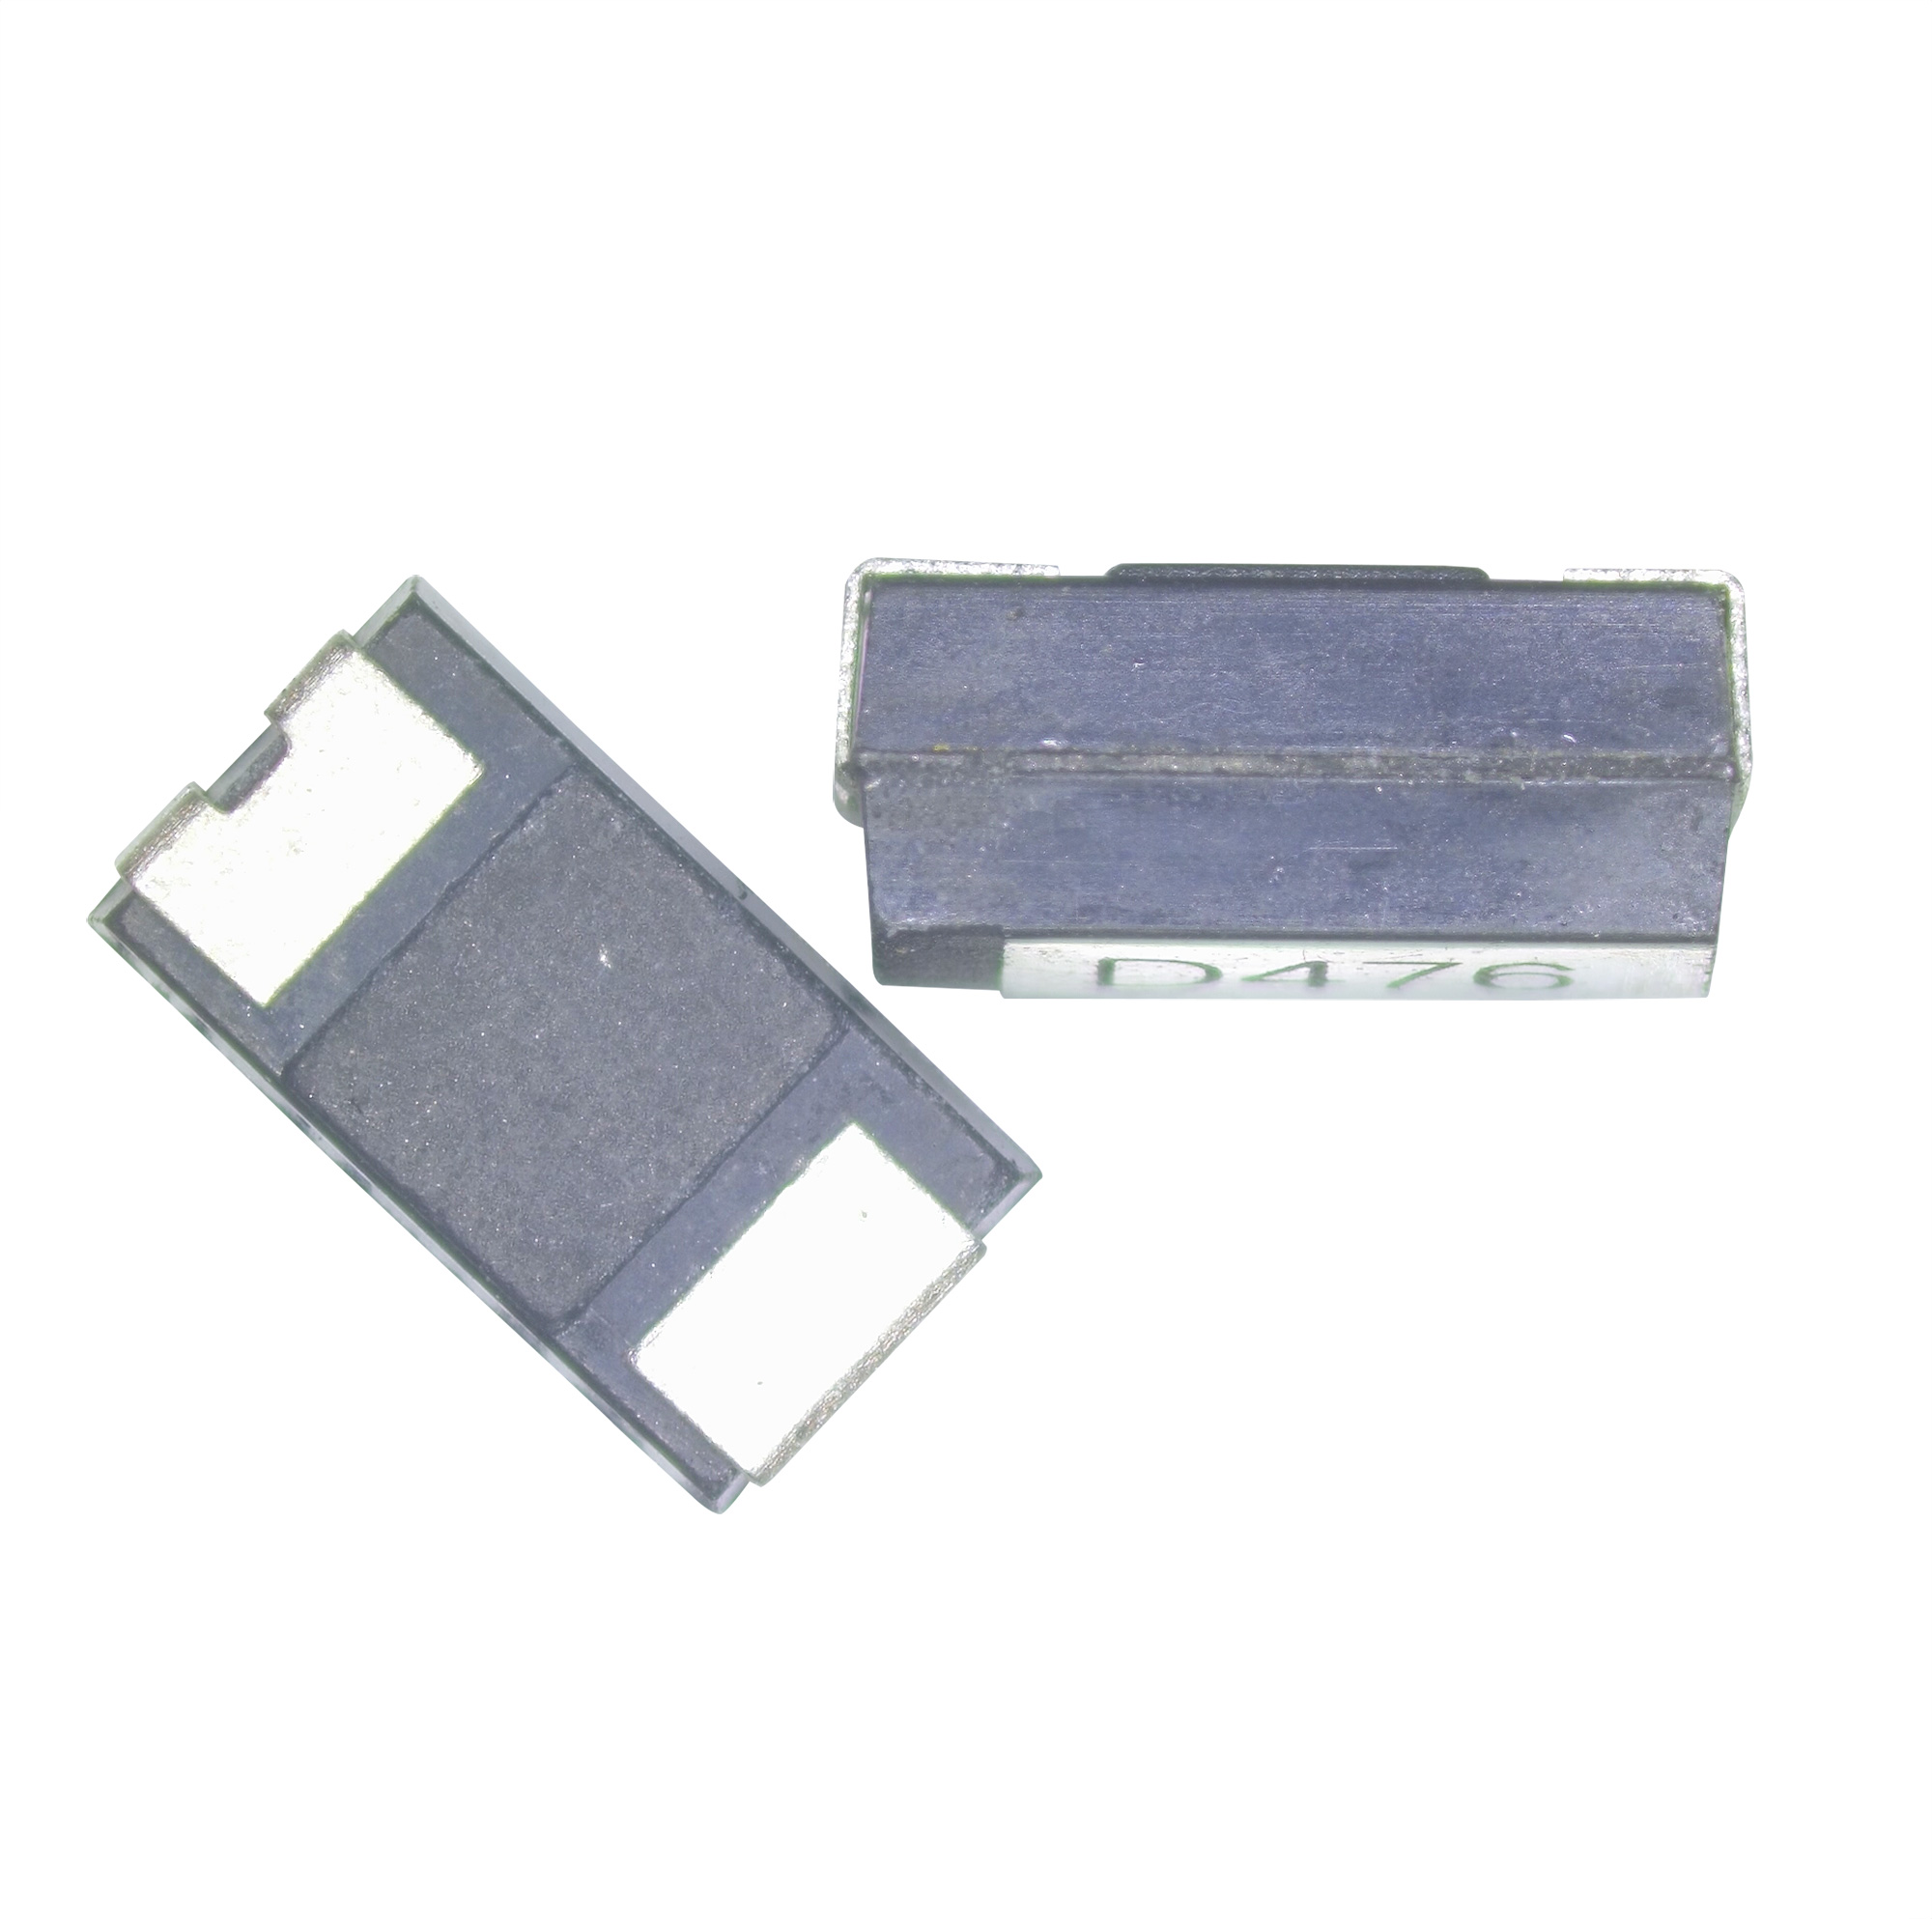 Chip conductive polymer tantalum capacitor